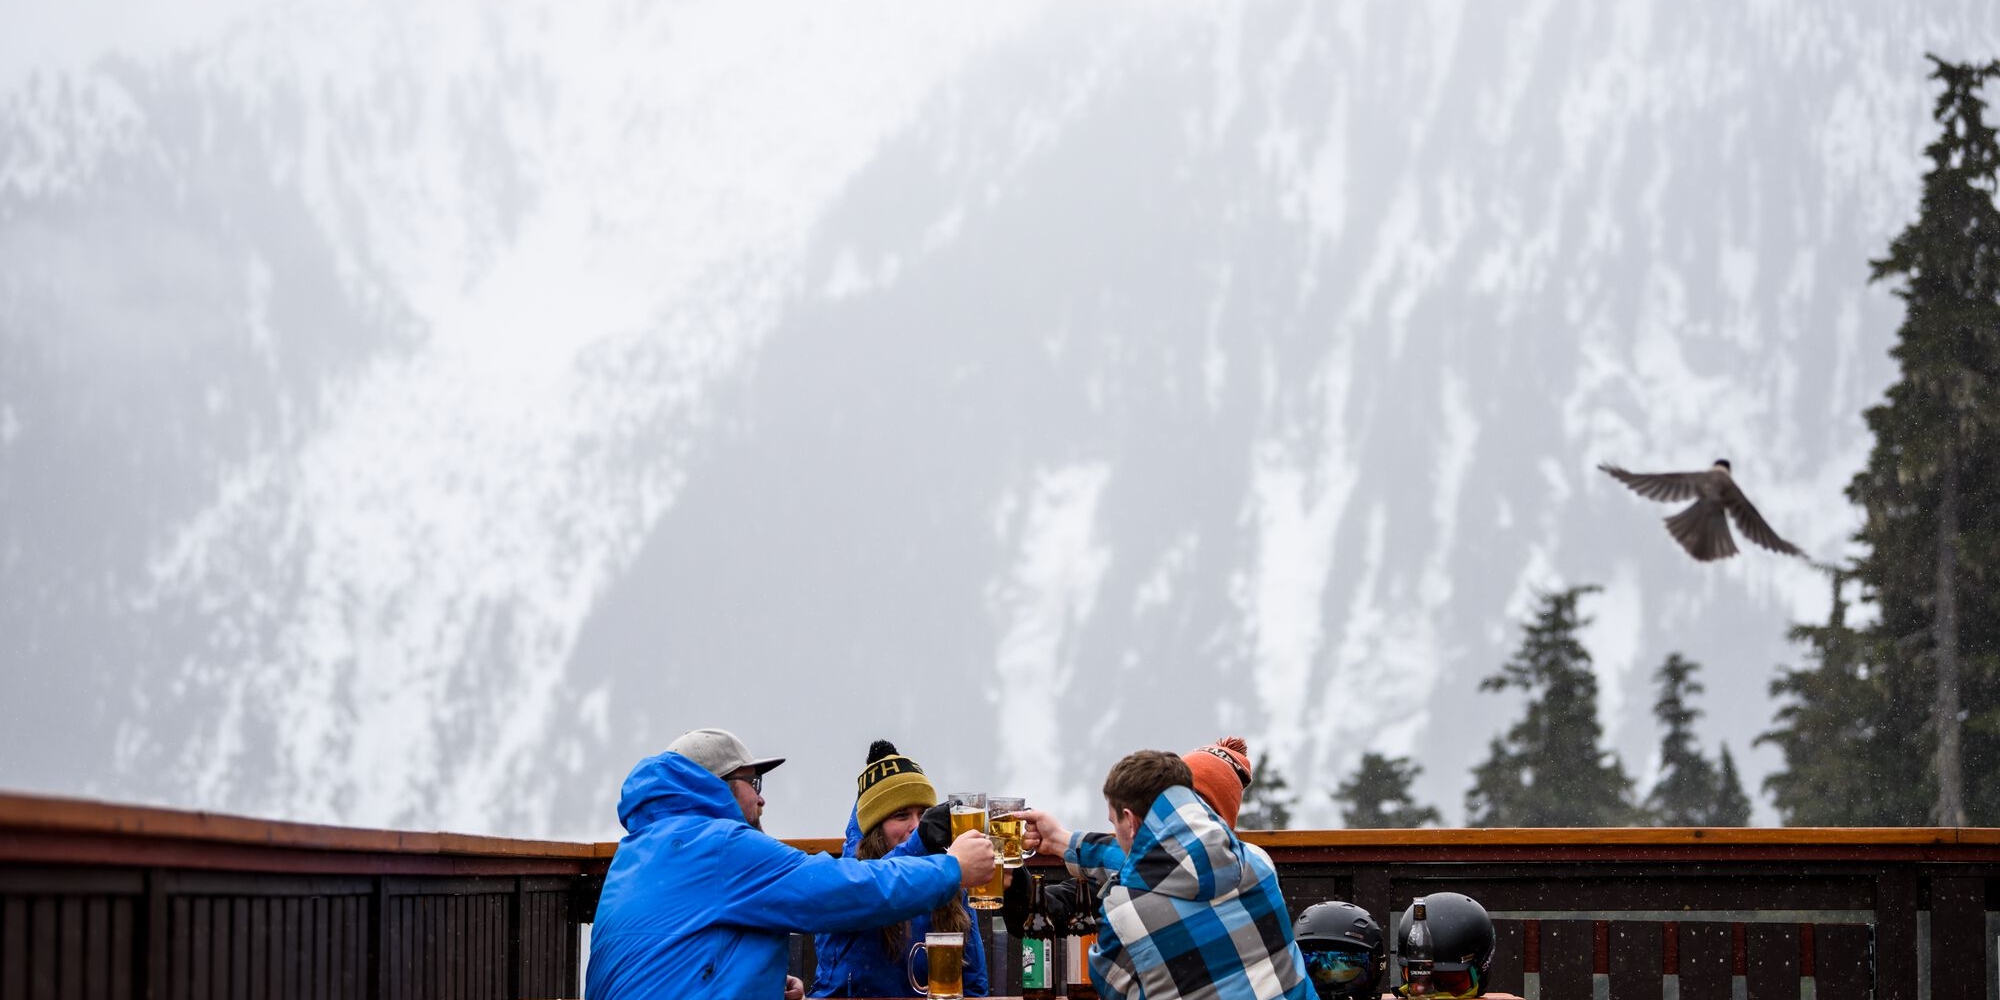 Après ski drinks at Shames Mountain Ski Area, Terrace BC | Andrew Strain